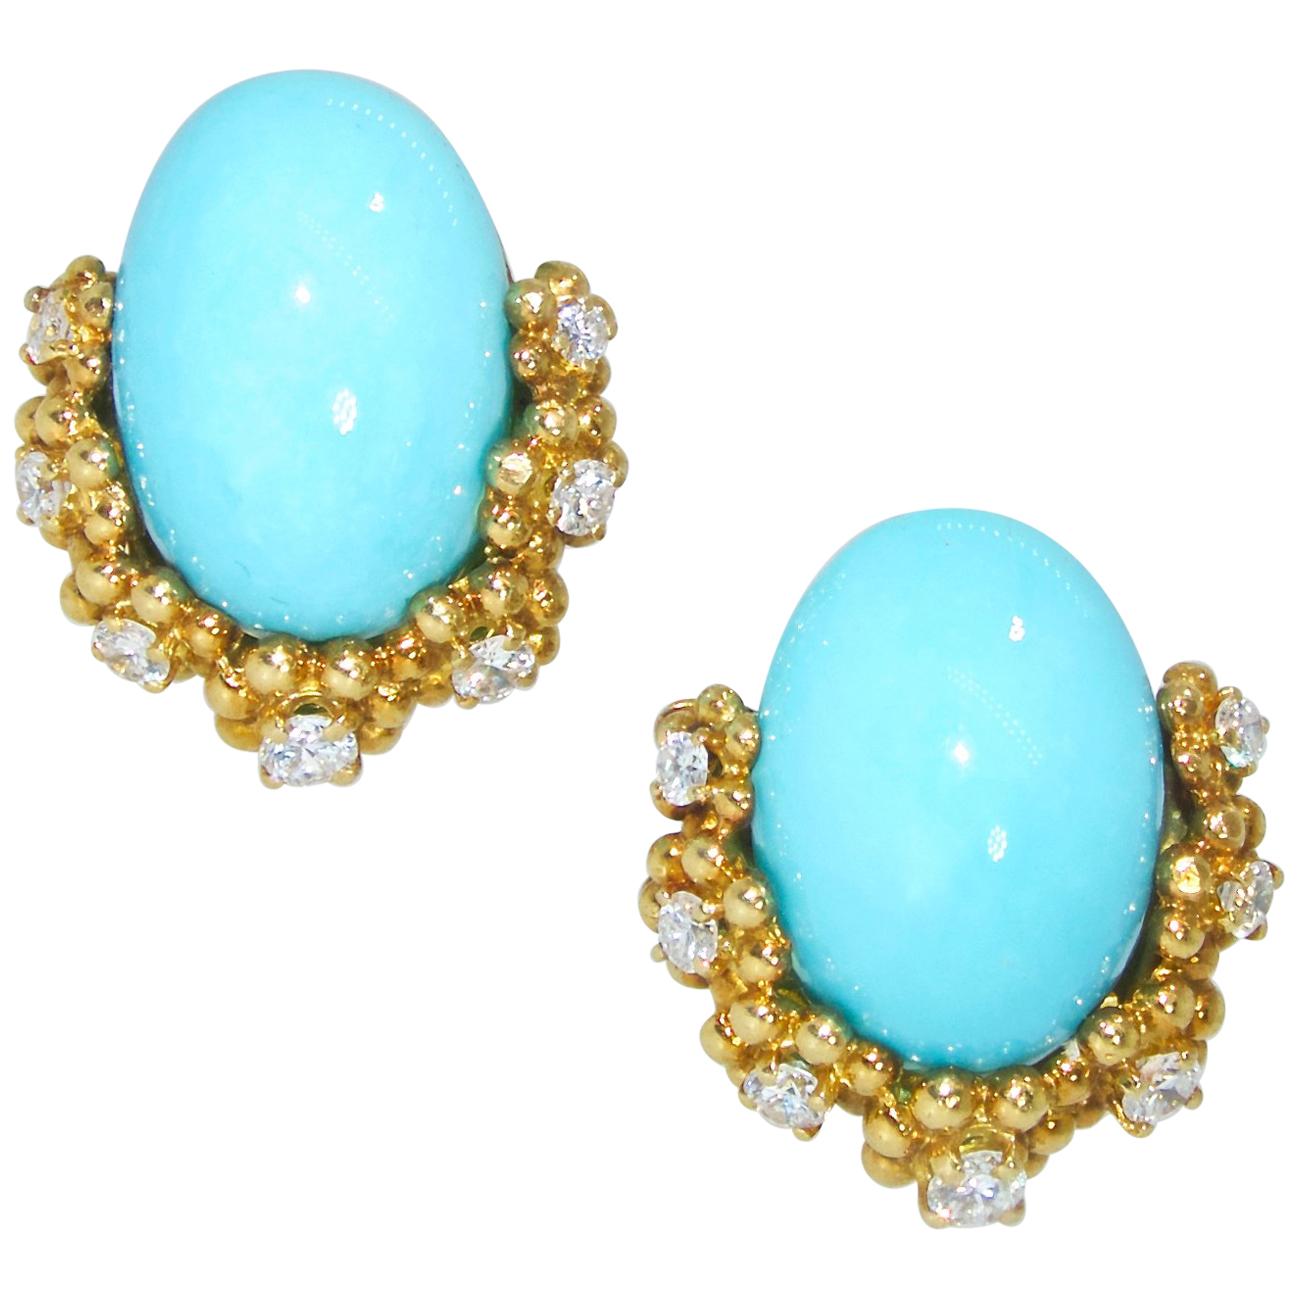 Tiffany Turquoise and Diamond Earrings